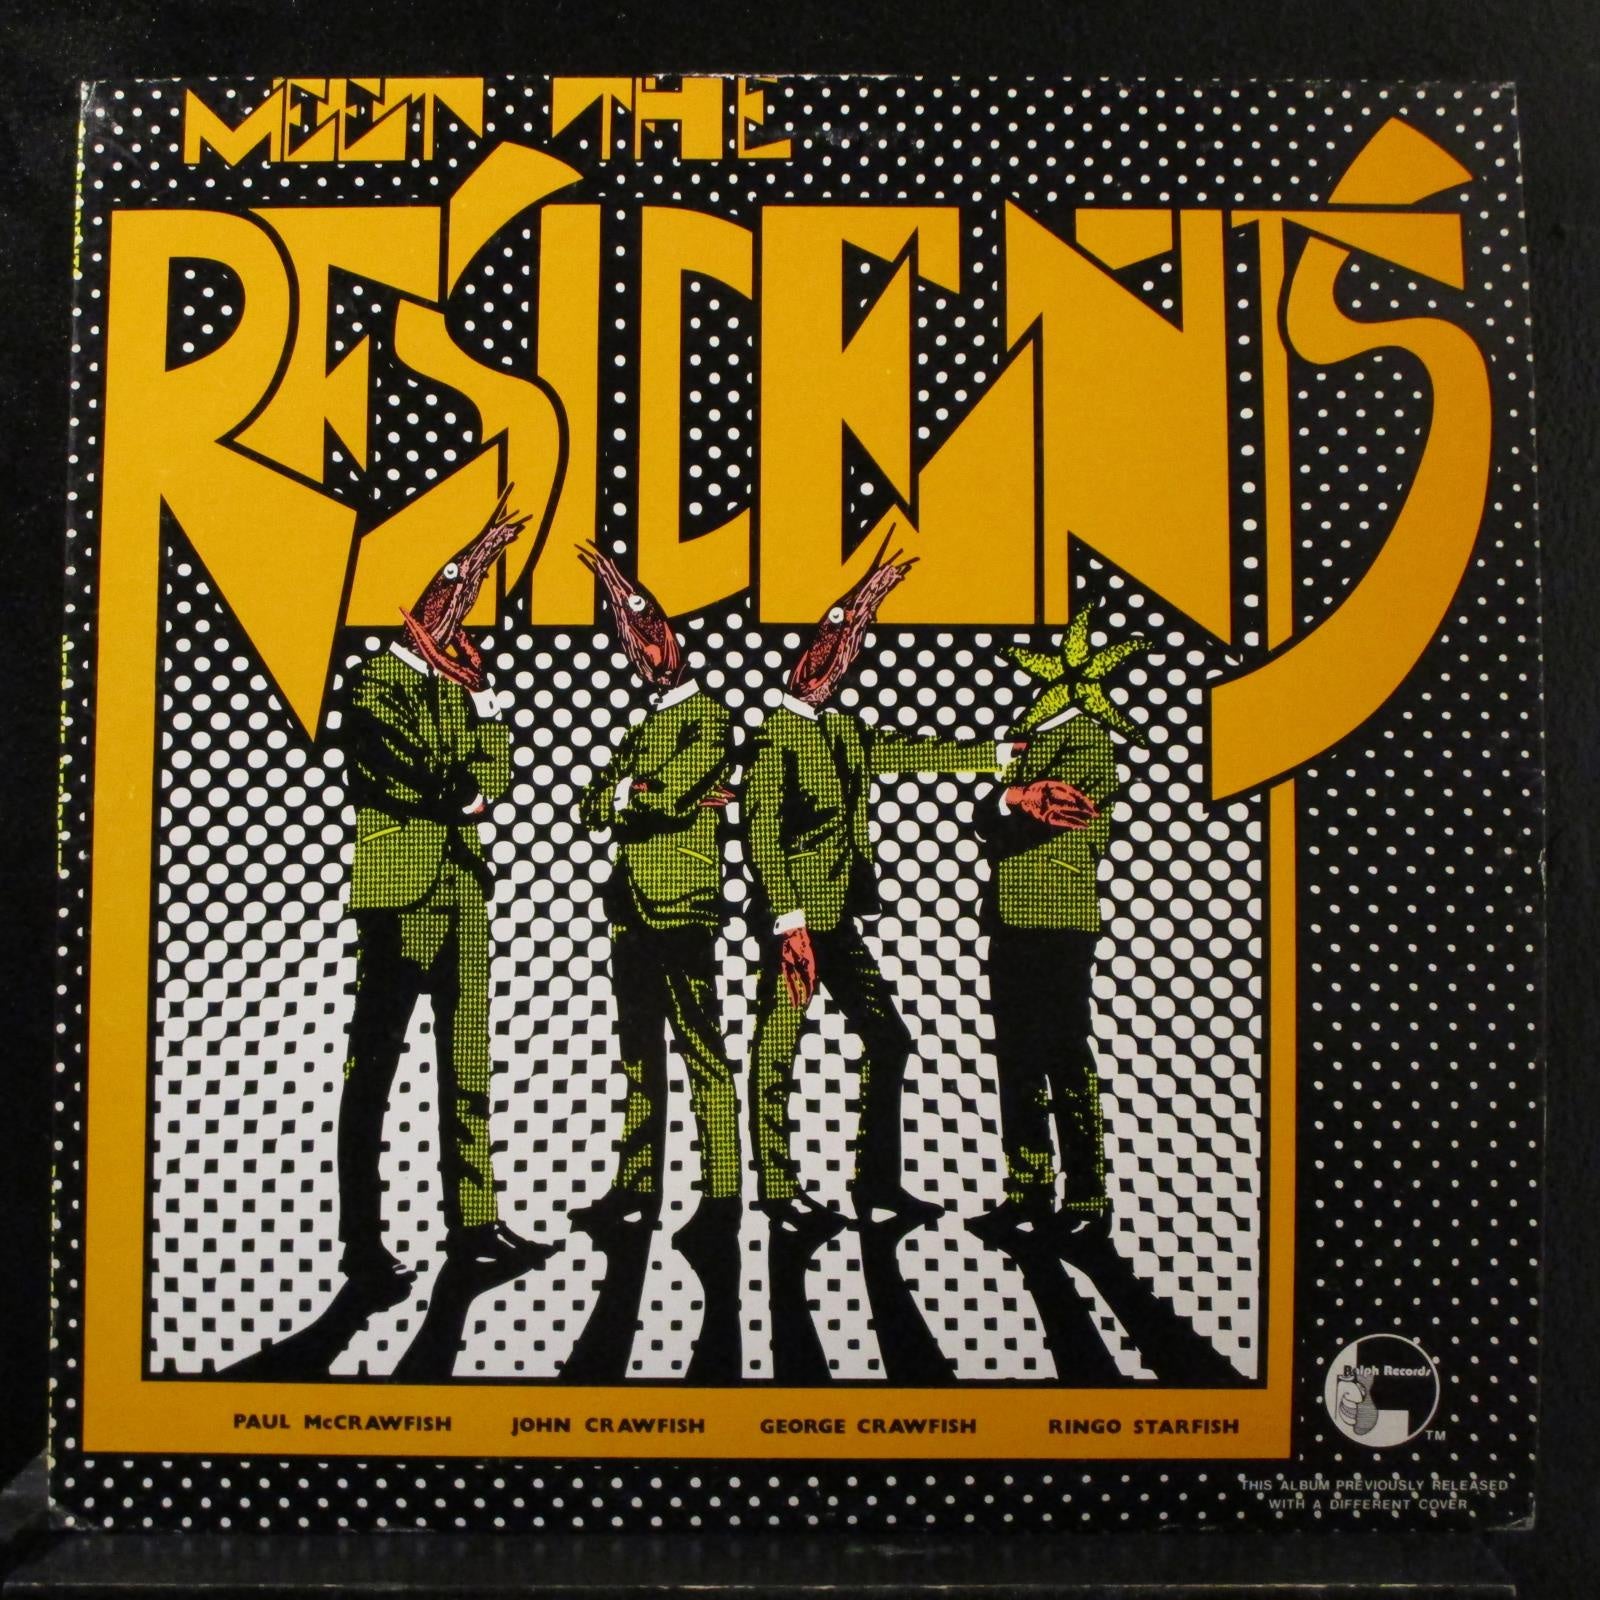 The Residents – Meet The Residents (1974) - VG+ LP Record 1977 Ralph USA Vinyl - Electronic / Experimental